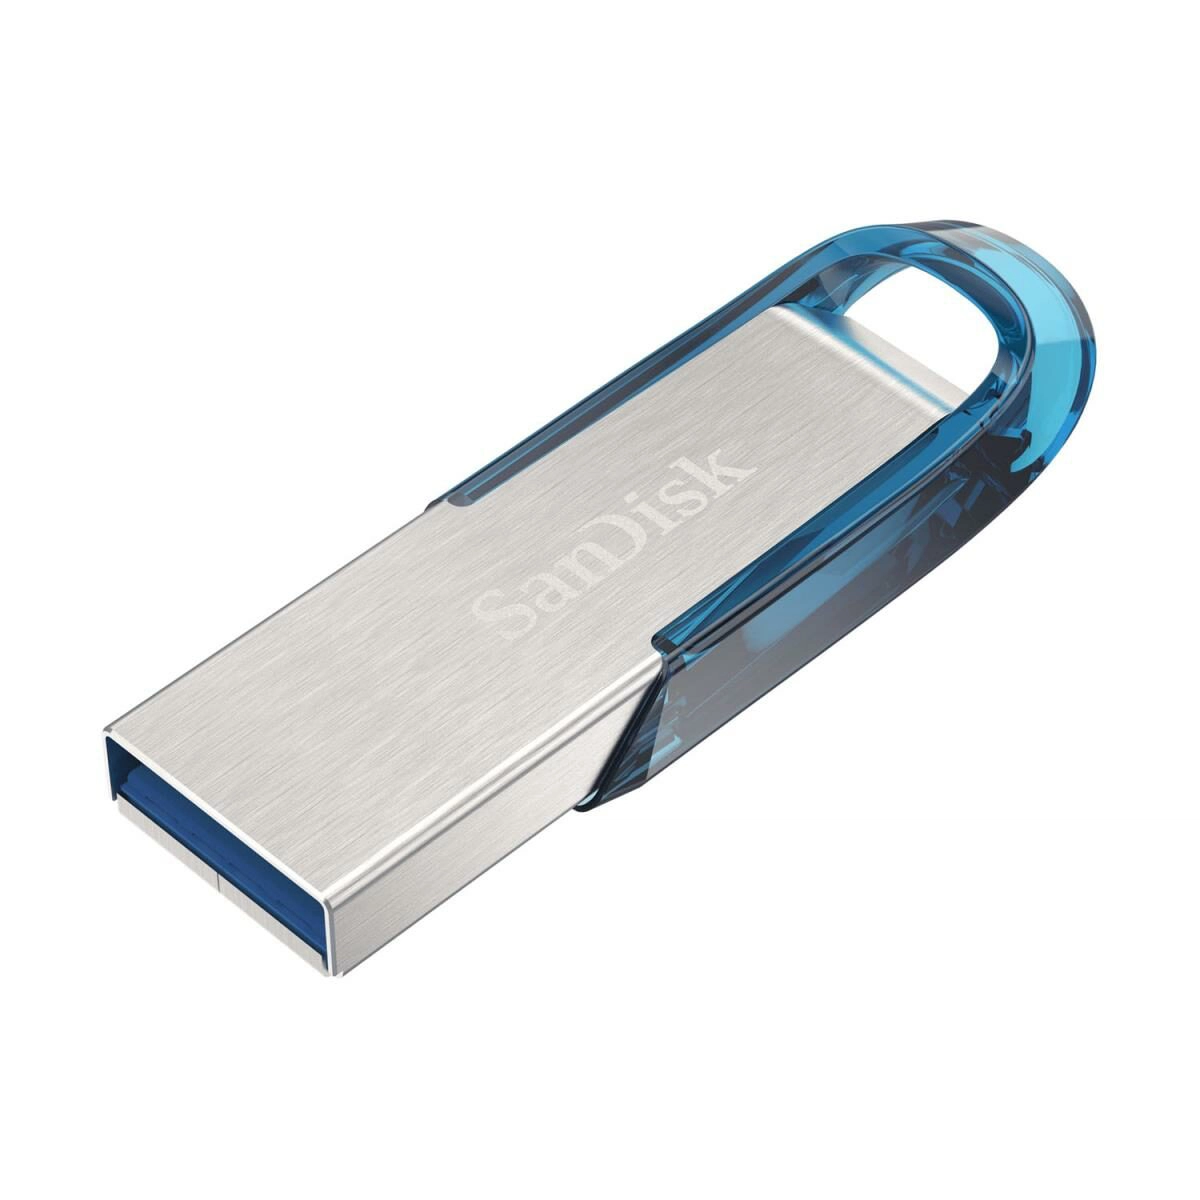 SanDisk Ultra Flair USB 3.0 Flash Drive Blue